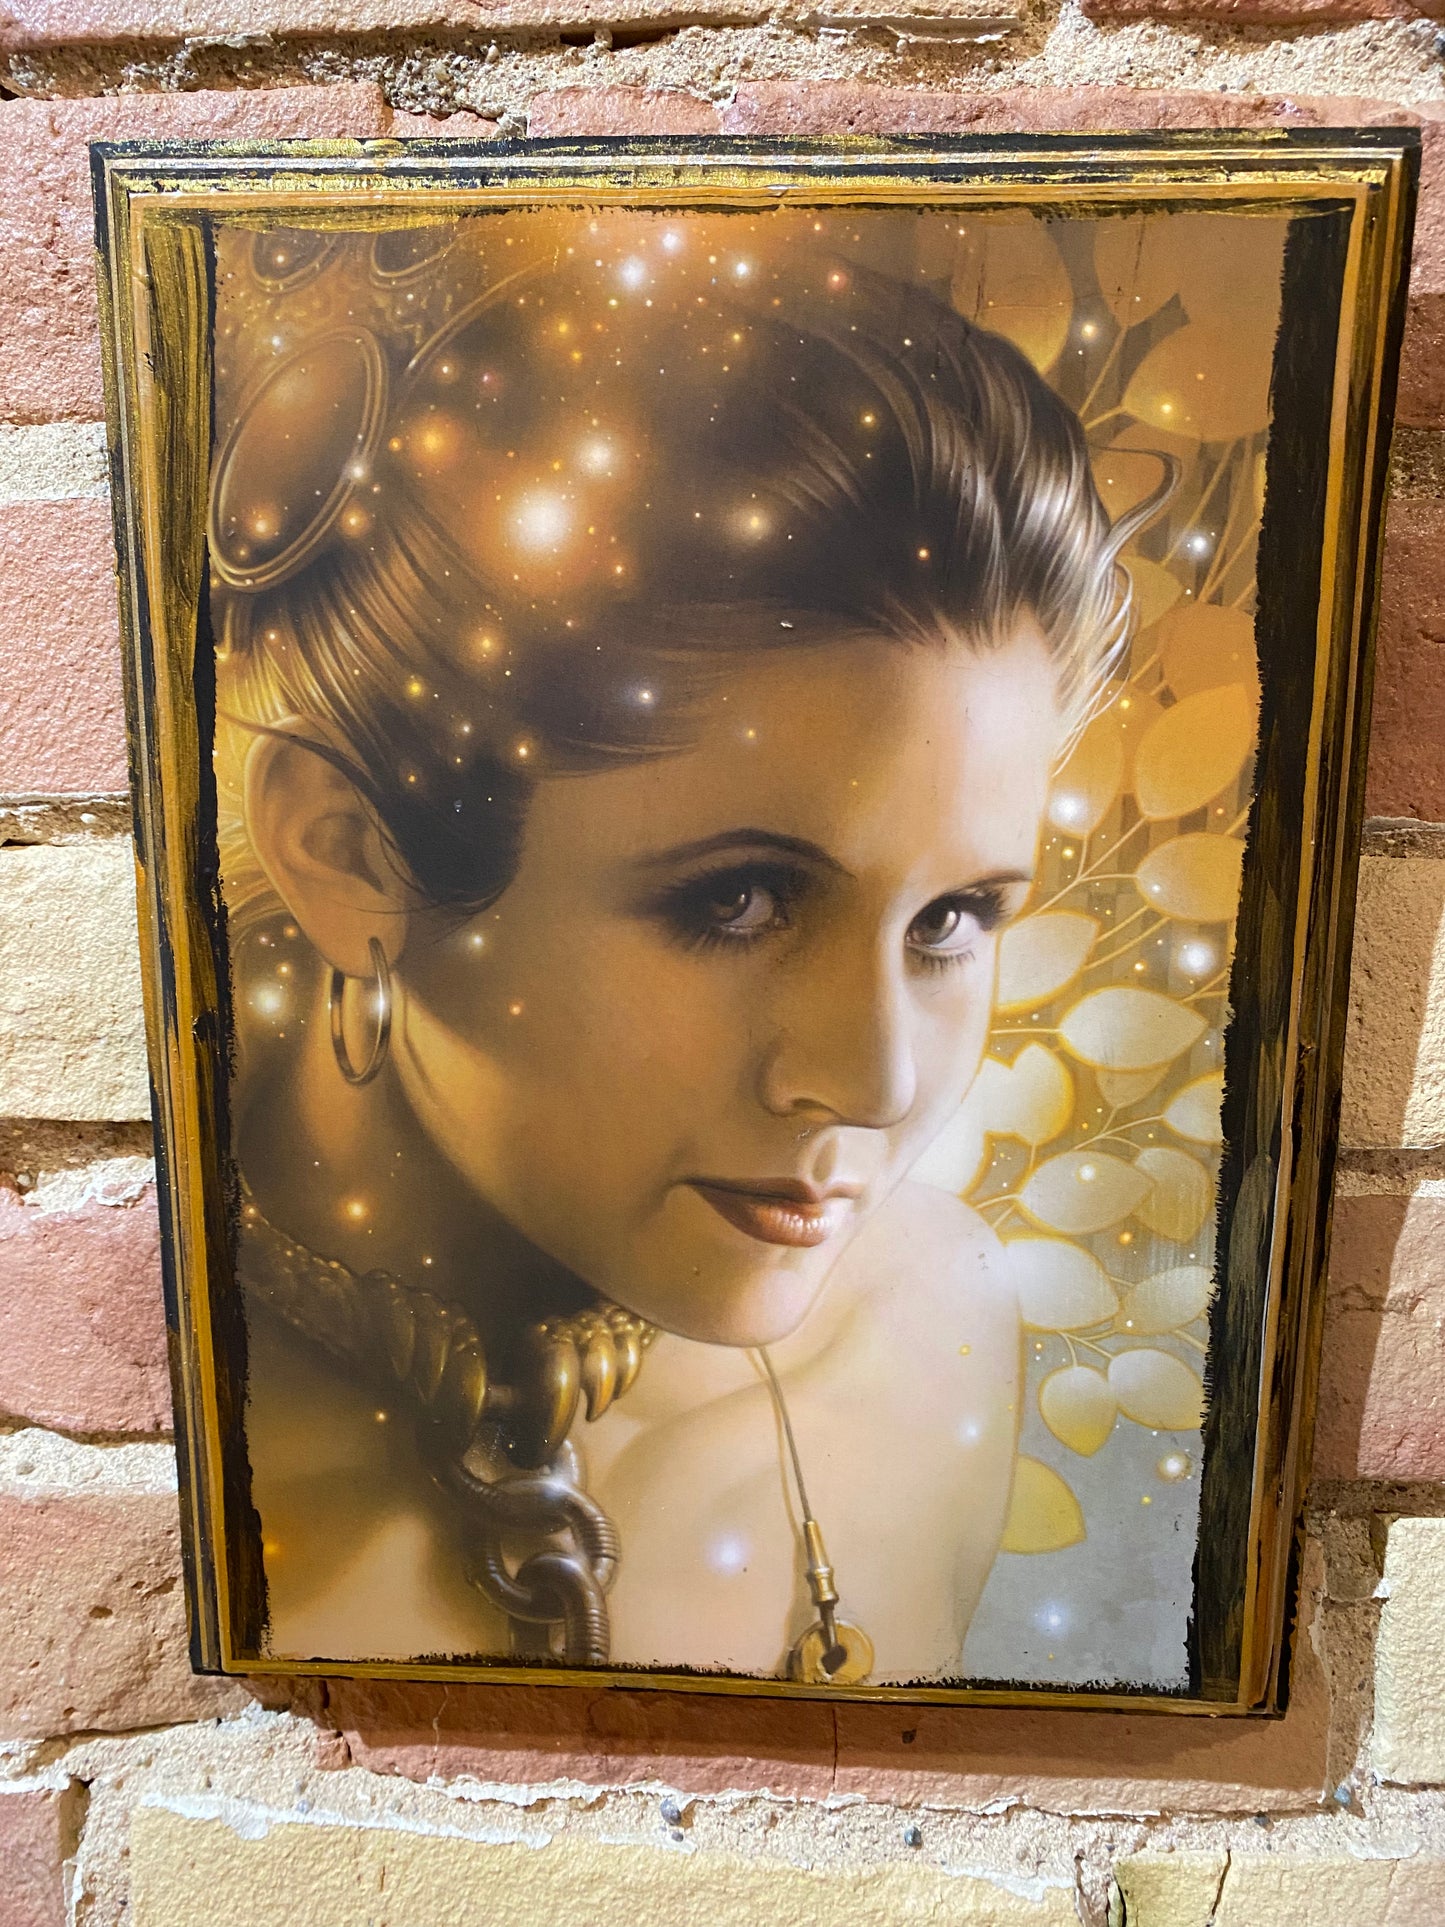 Star Wars Leia Handmade Wood Art Plaque 12x9